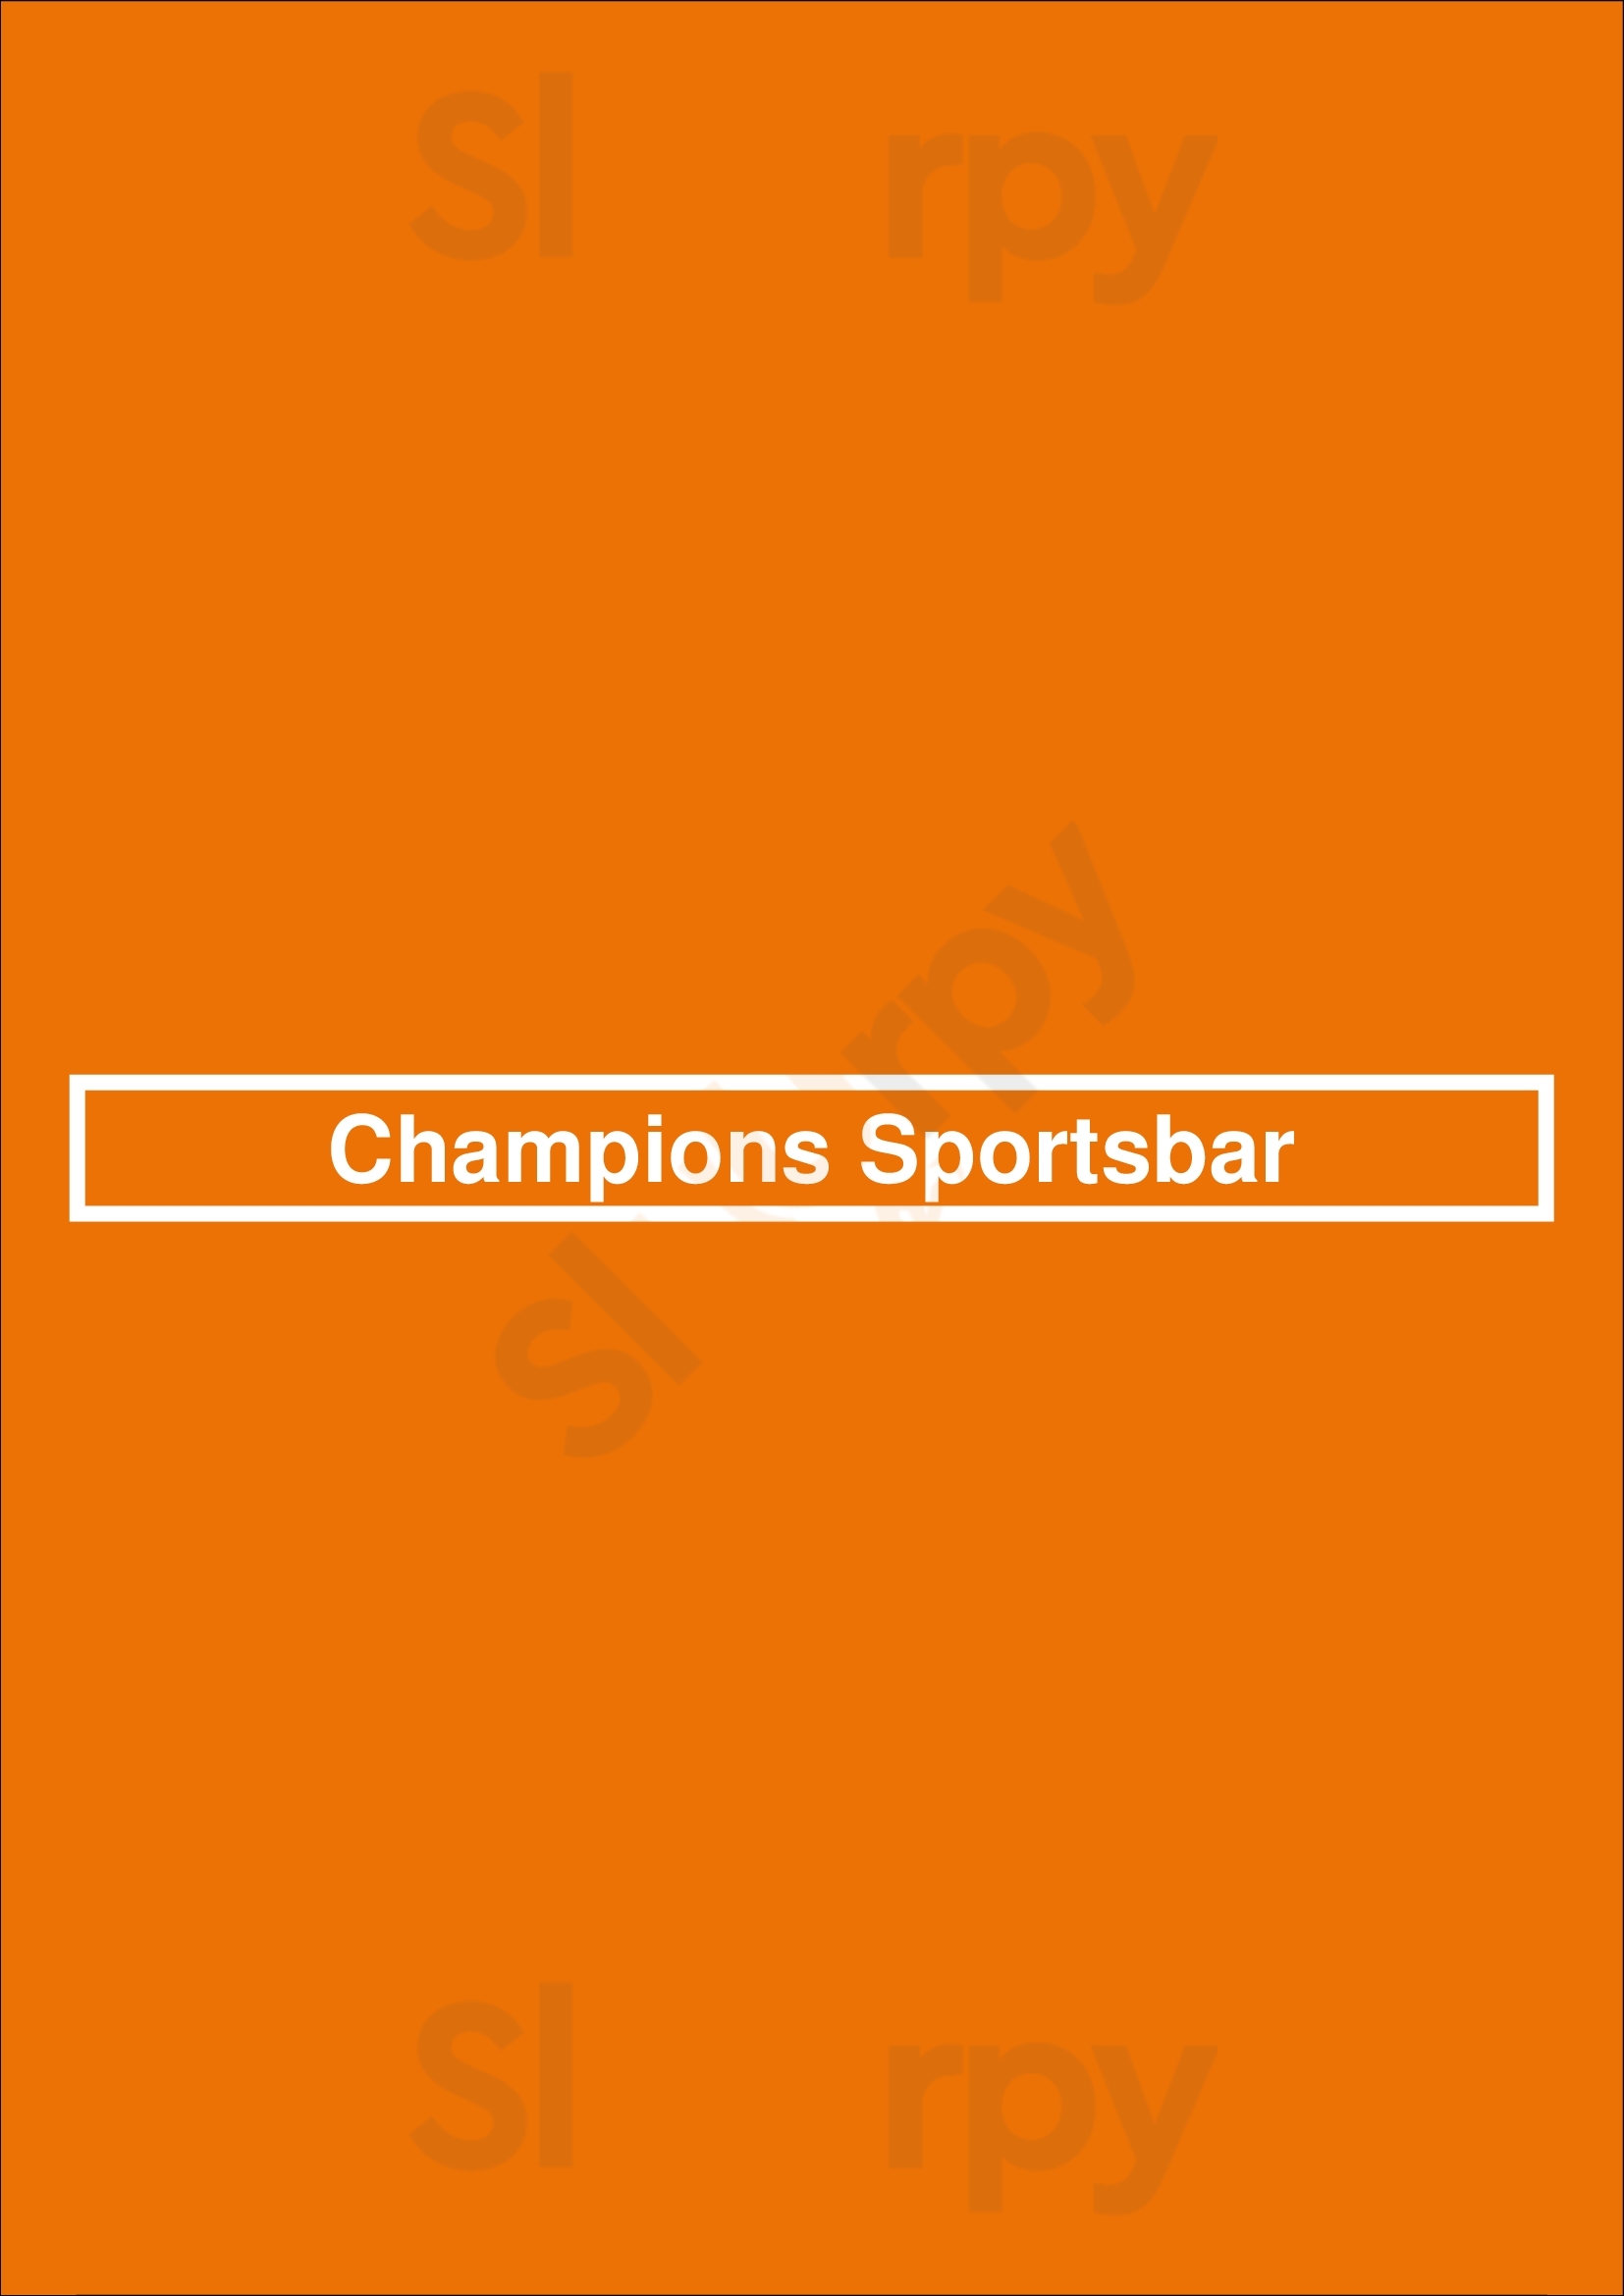 Champions Sportsbar München Menu - 1